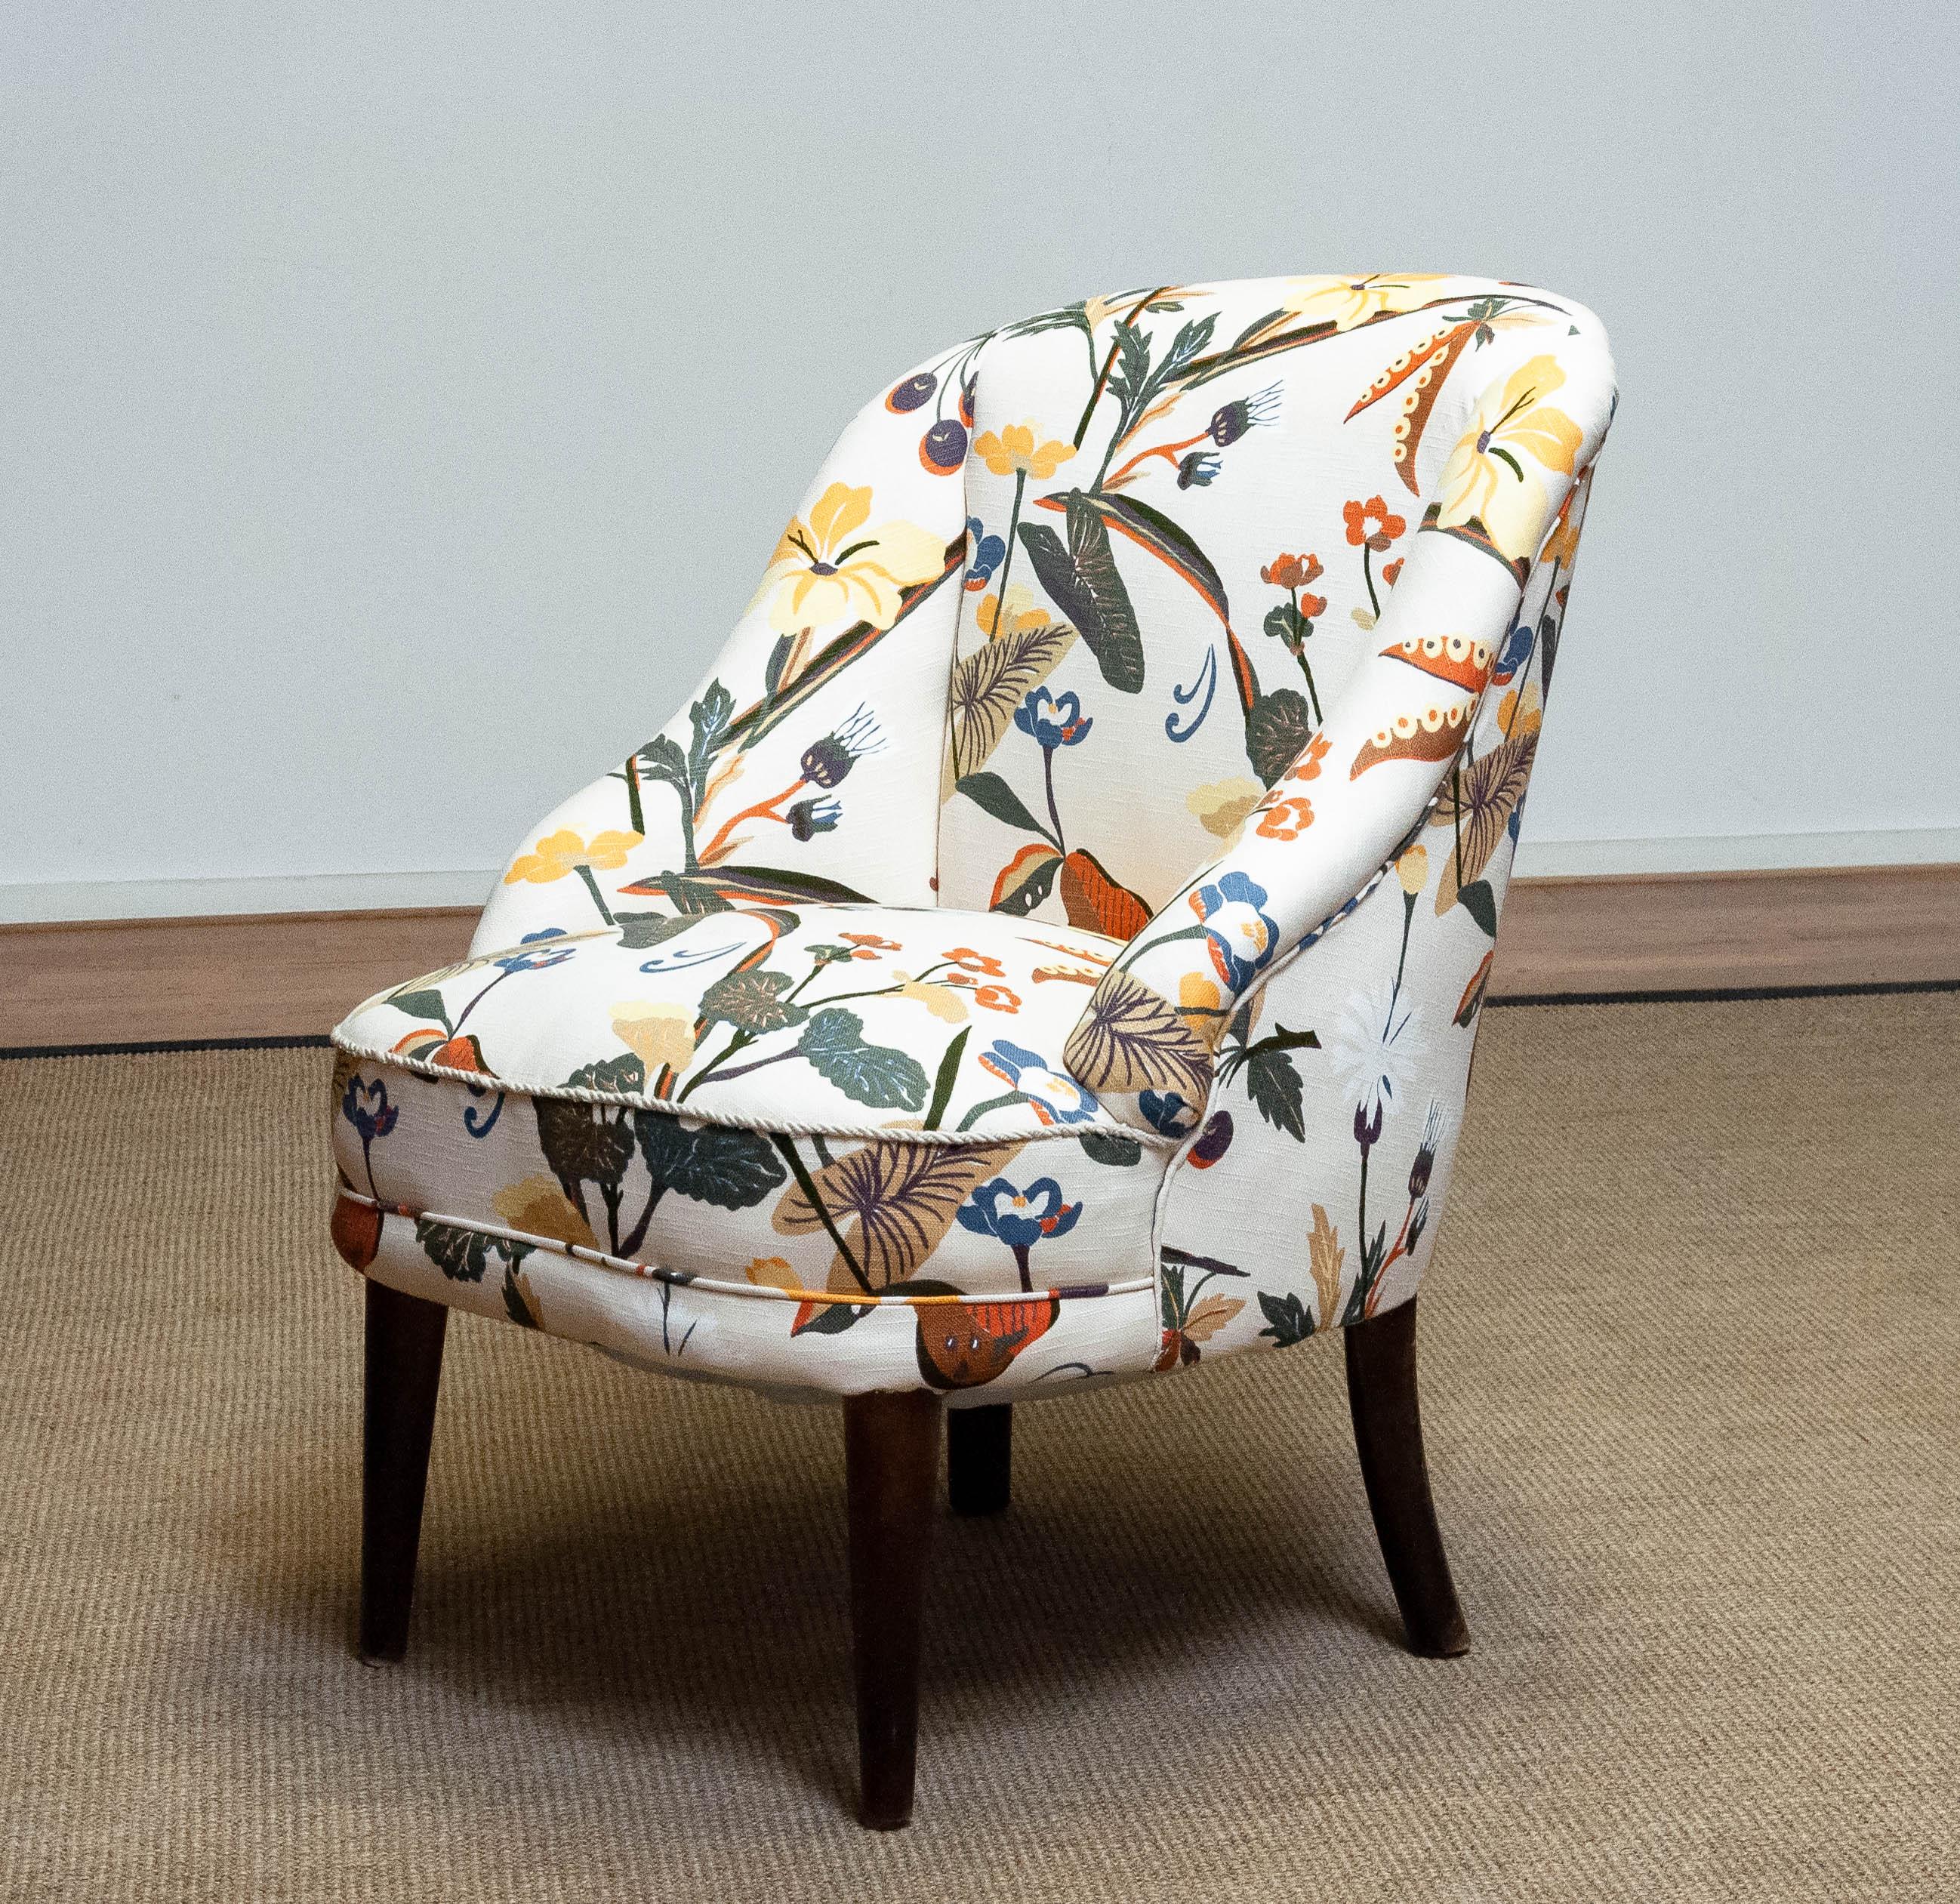 '40s Floral Printed Linen, J. Frank Style, New Upholstered Danish Slipper Chair For Sale 5